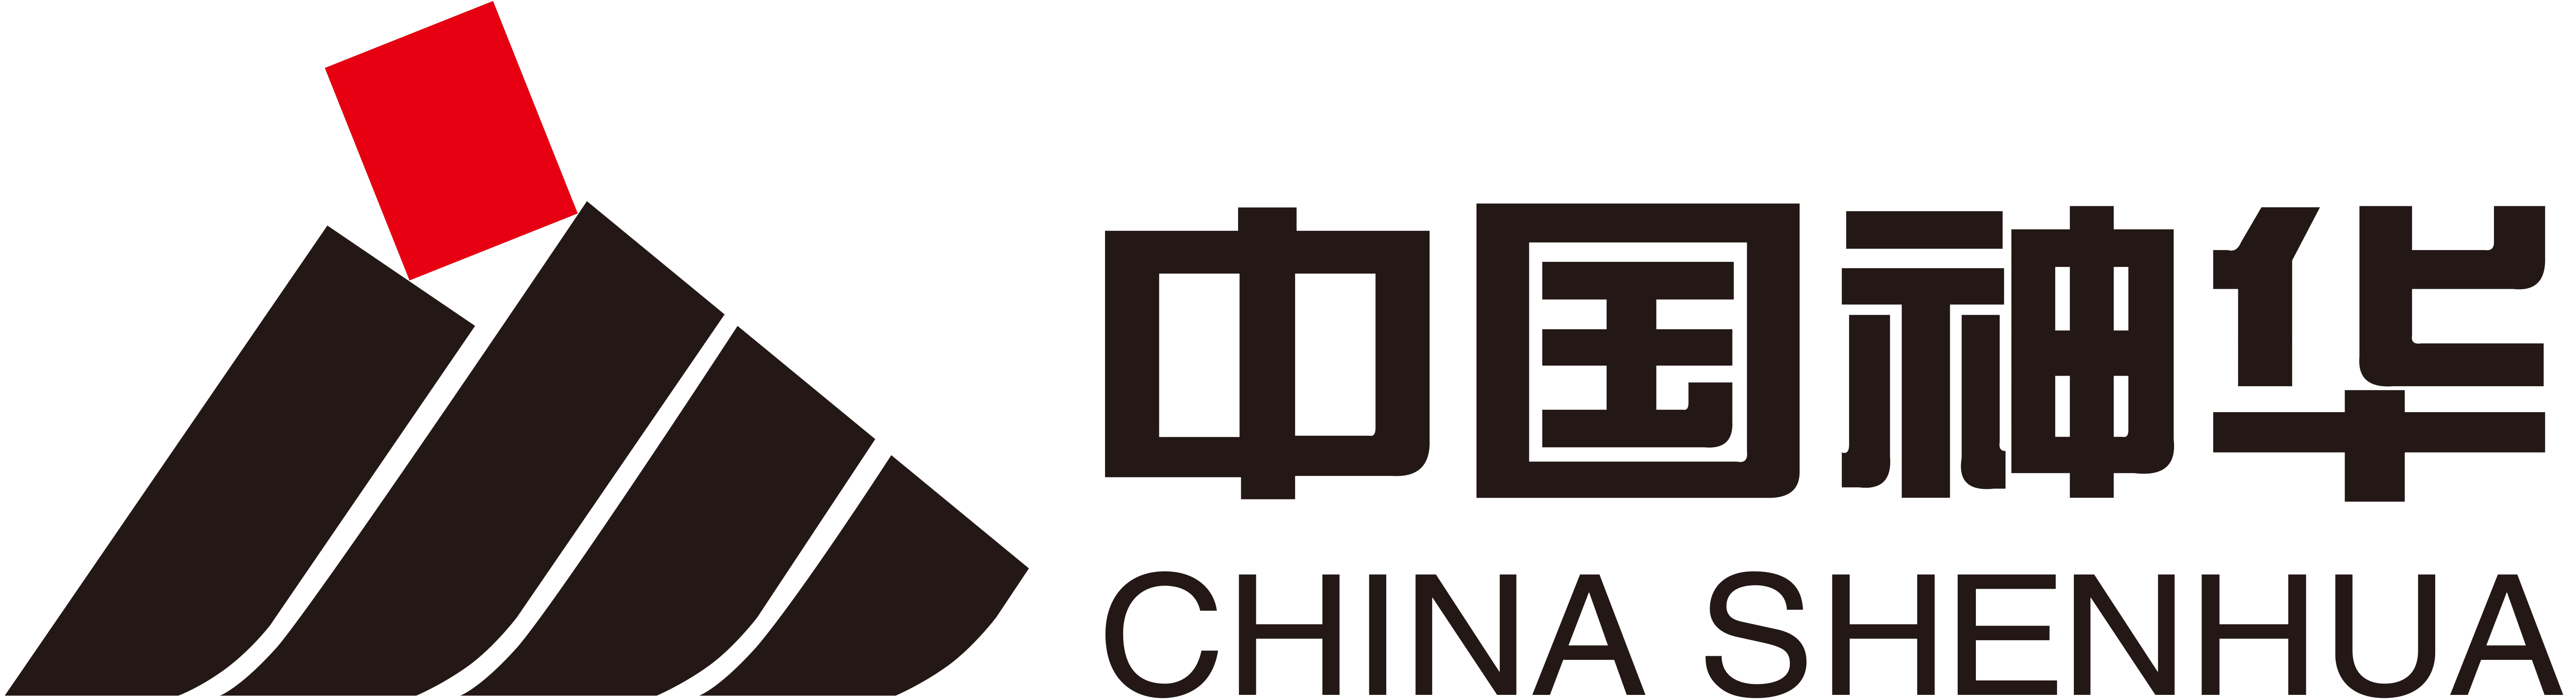 China Shenhua Energy – Logos Download